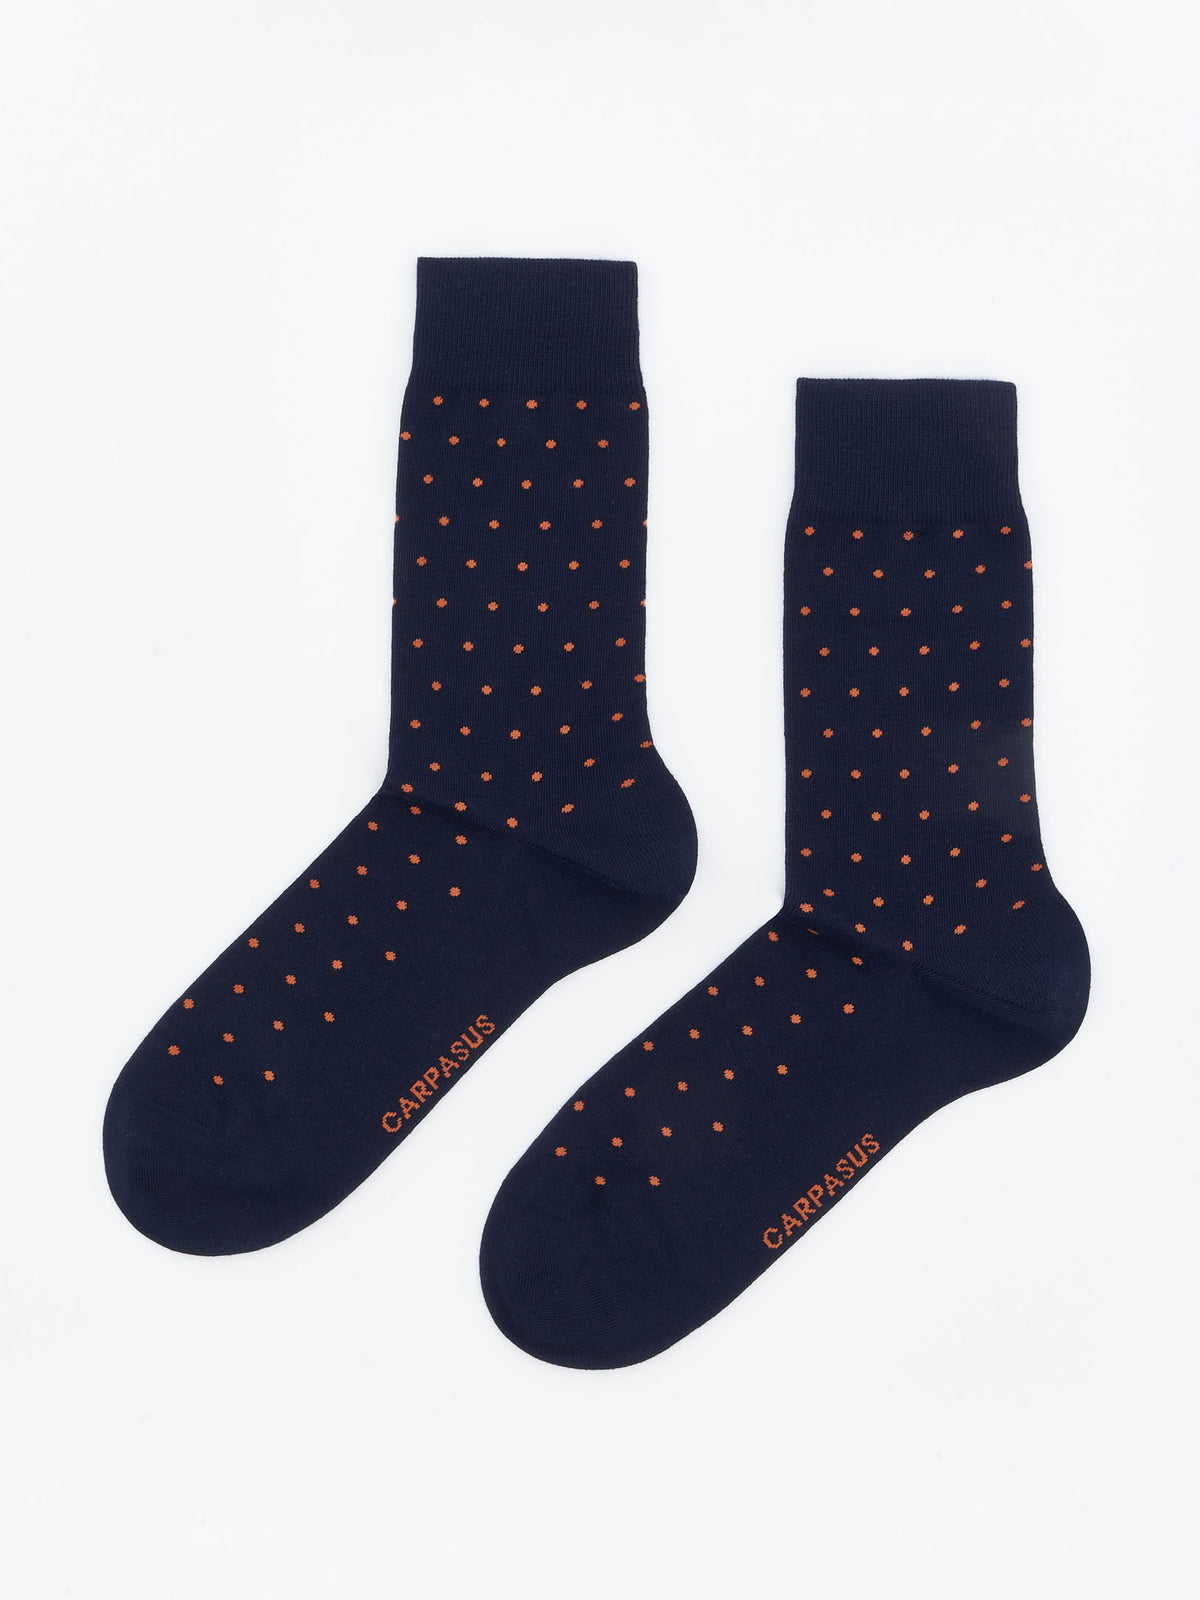 Classy Socken Punkte Navy/Orange